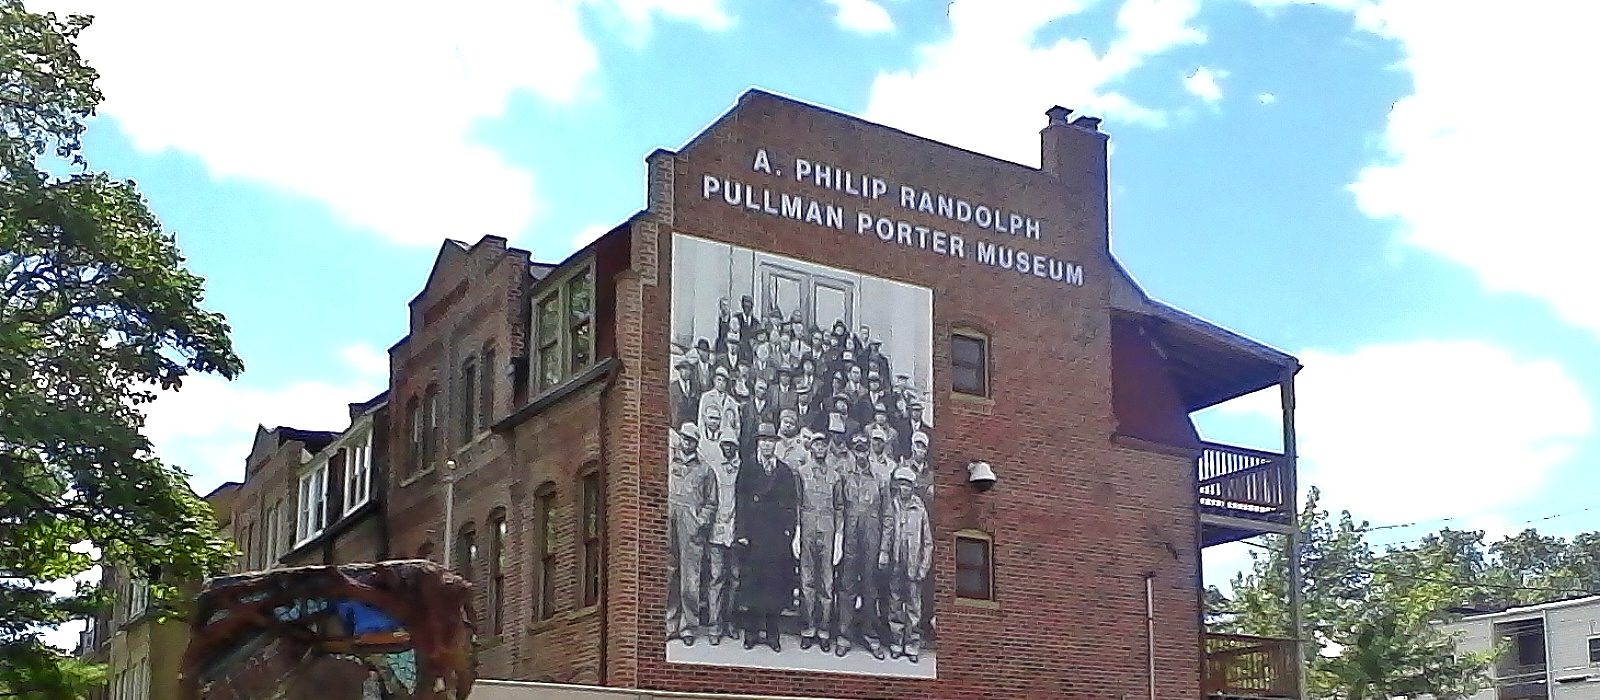 Image of the A. Philip Randolph Pullman Porter Museum